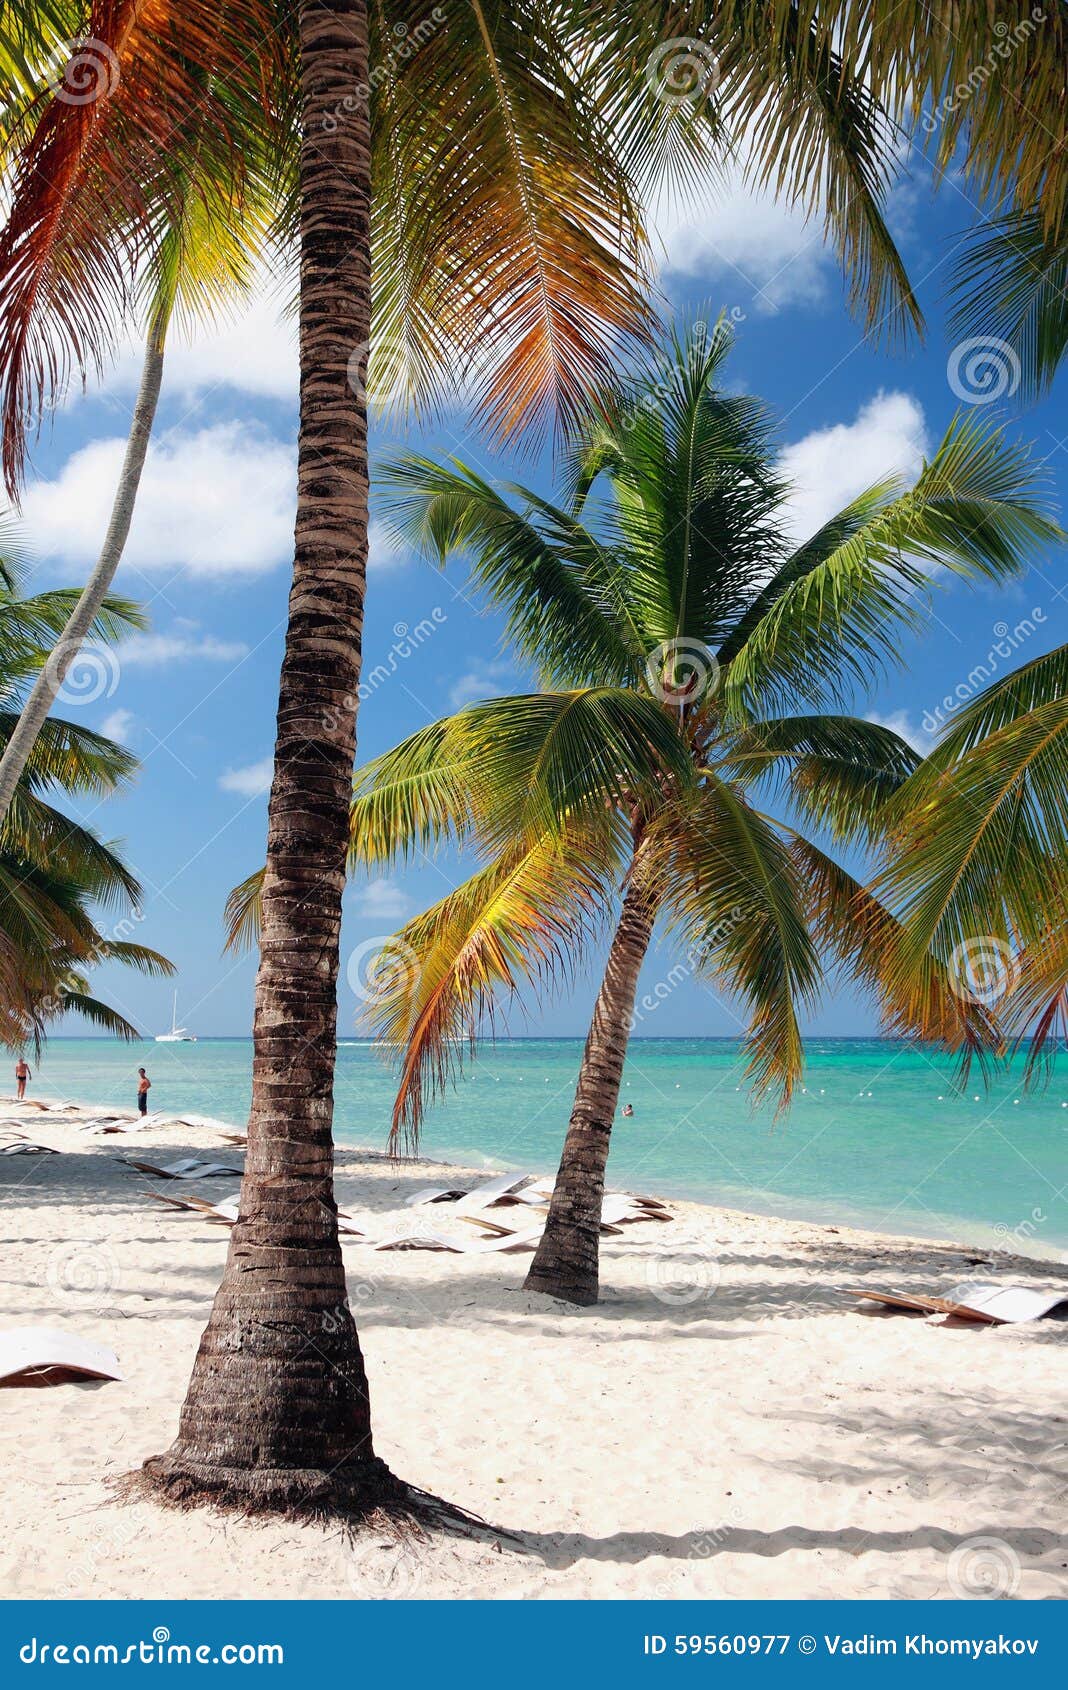 beach in tropics. isla saona, la romana, dominicana